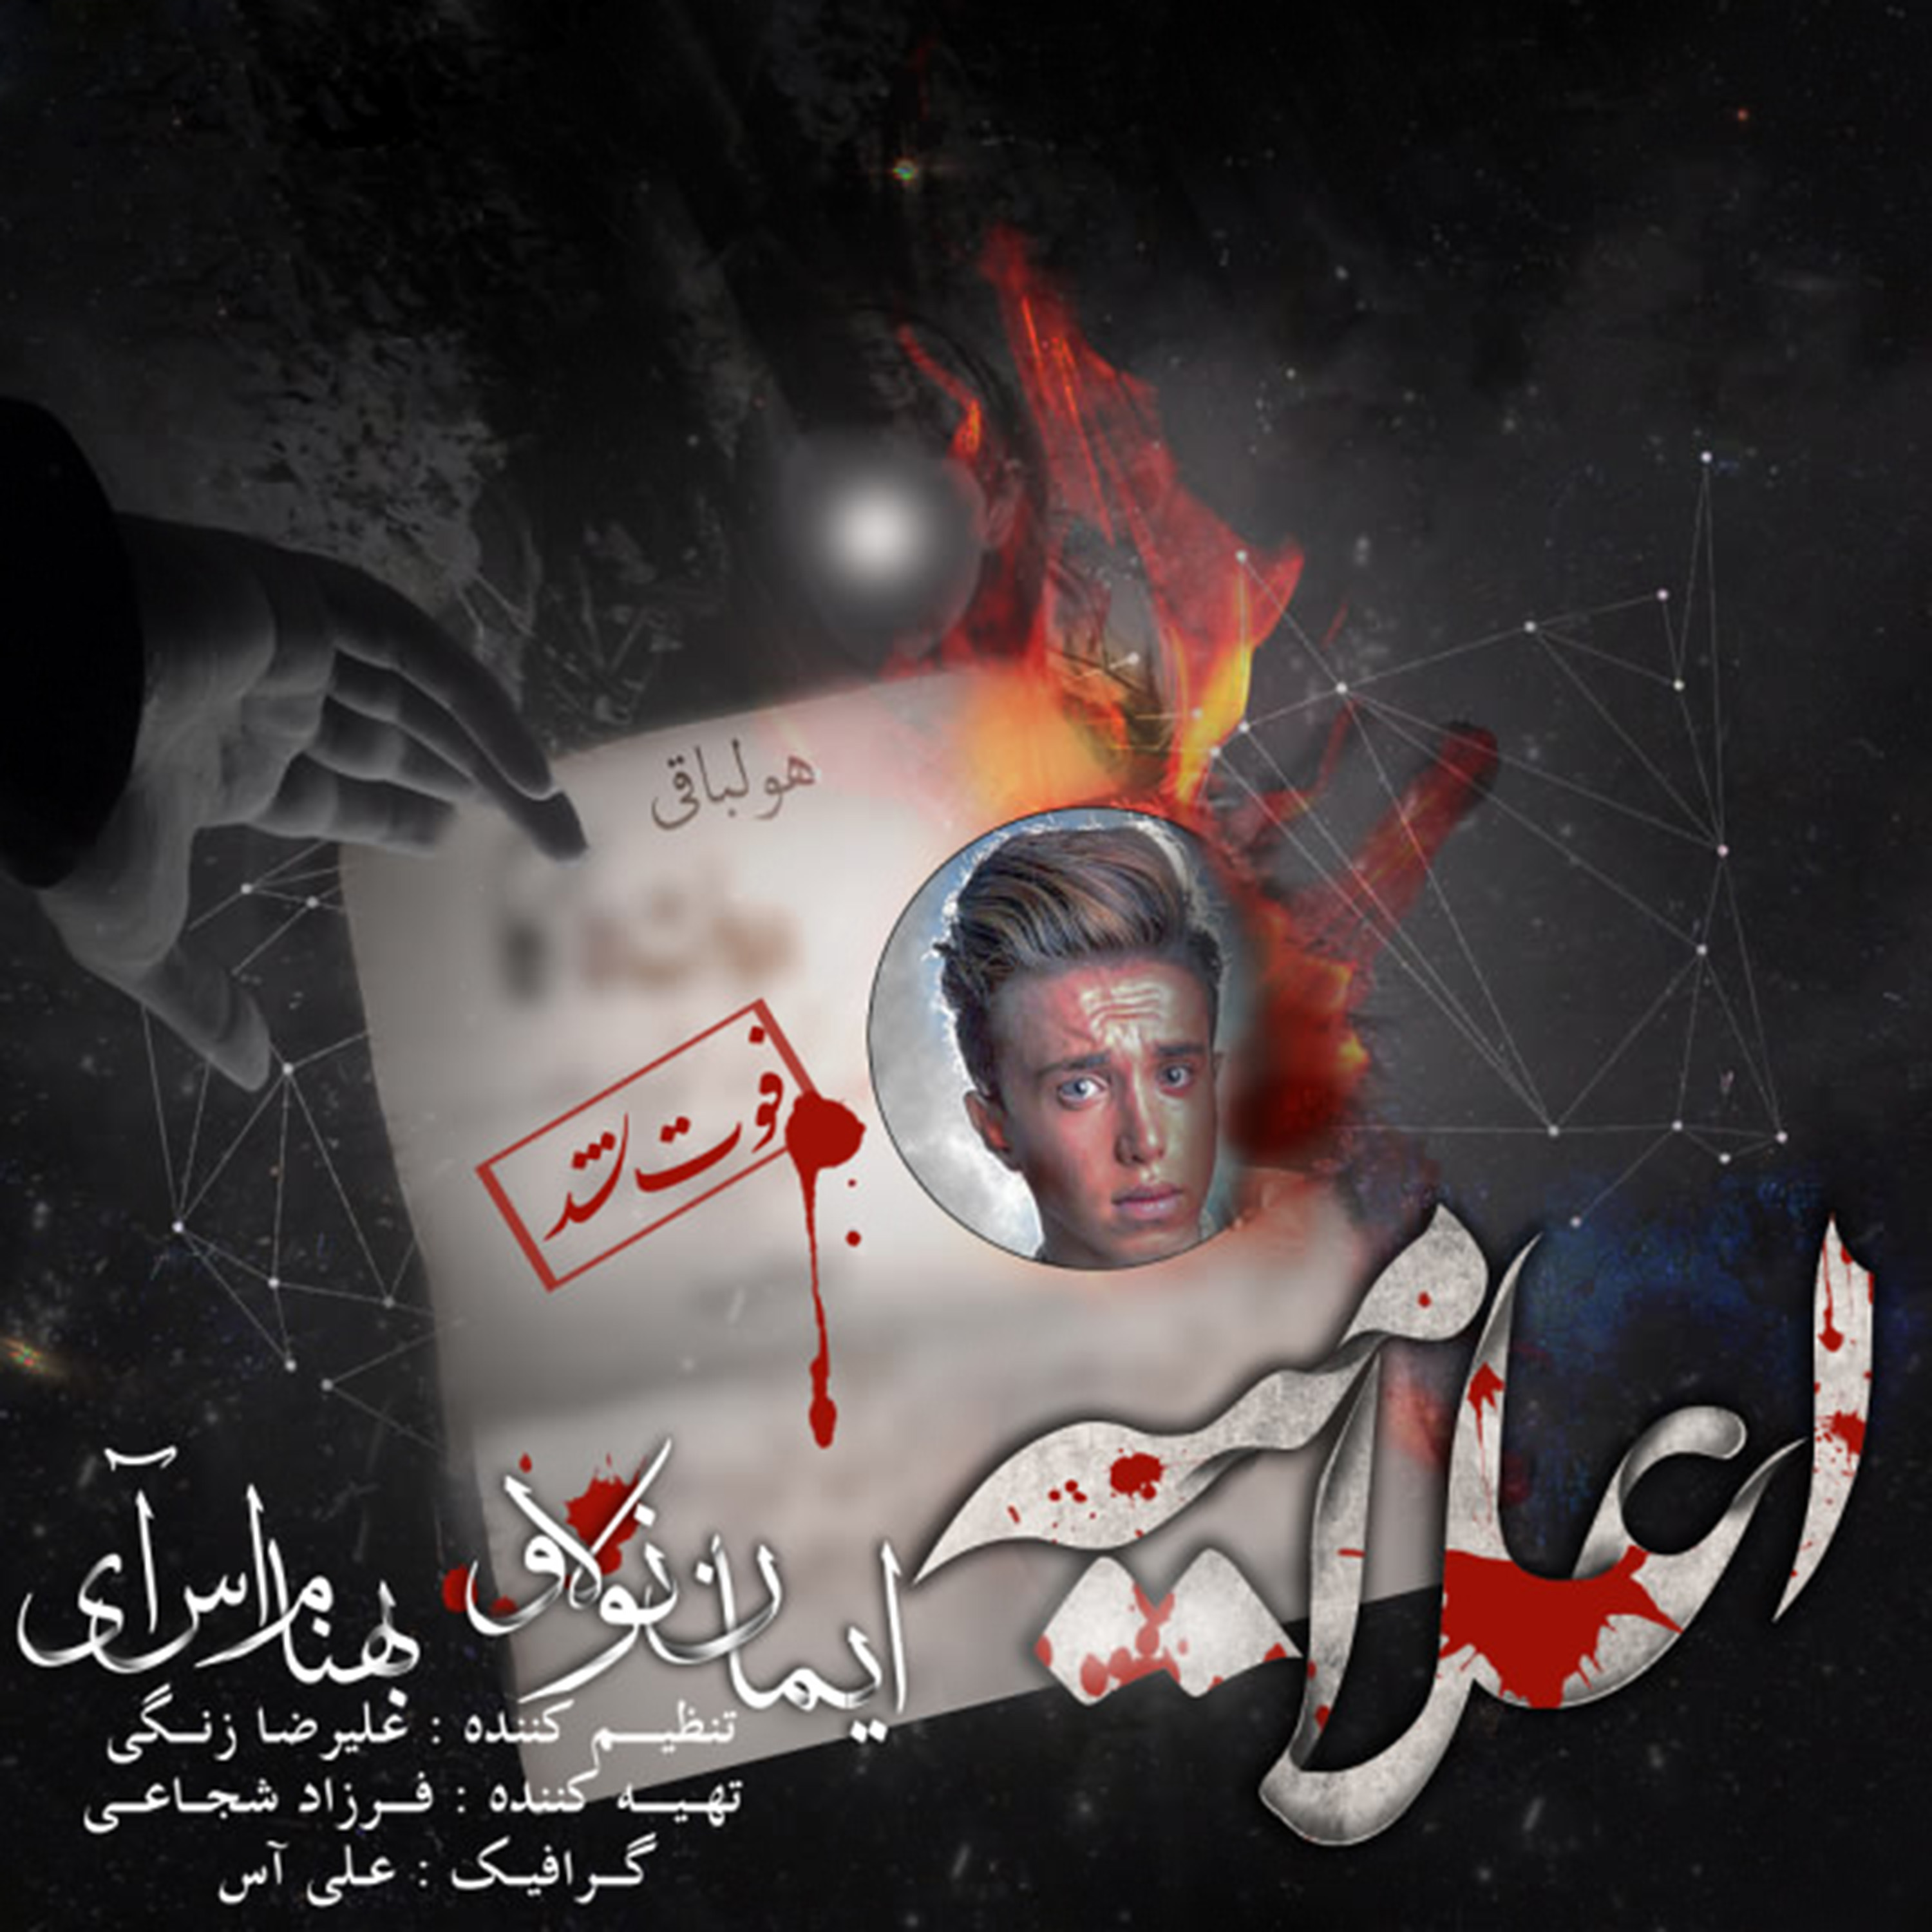  دانلود آهنگ جدید بهنام اِس آی - اعلامیه | Download New Music By Behnam Si - Elamiyeh (feat. Iman No Love)